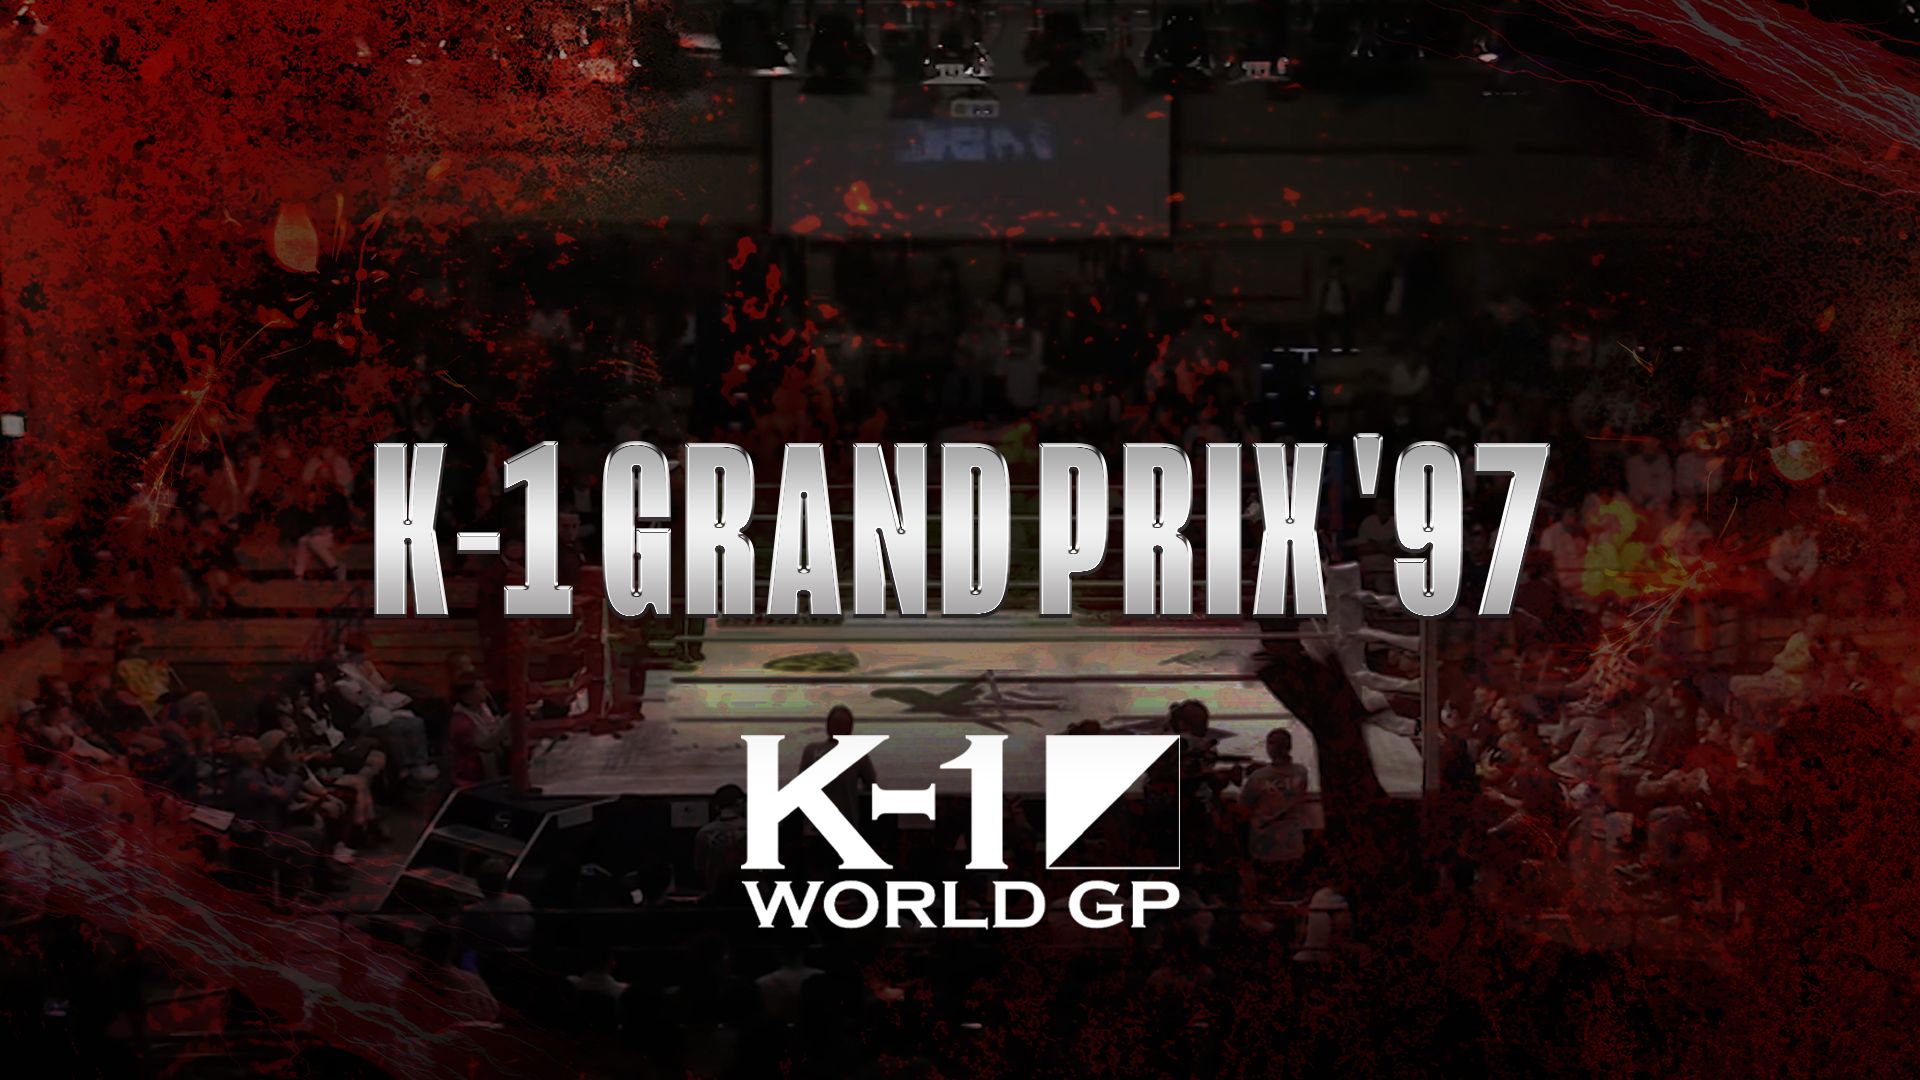 K-1 Grand Prix '97